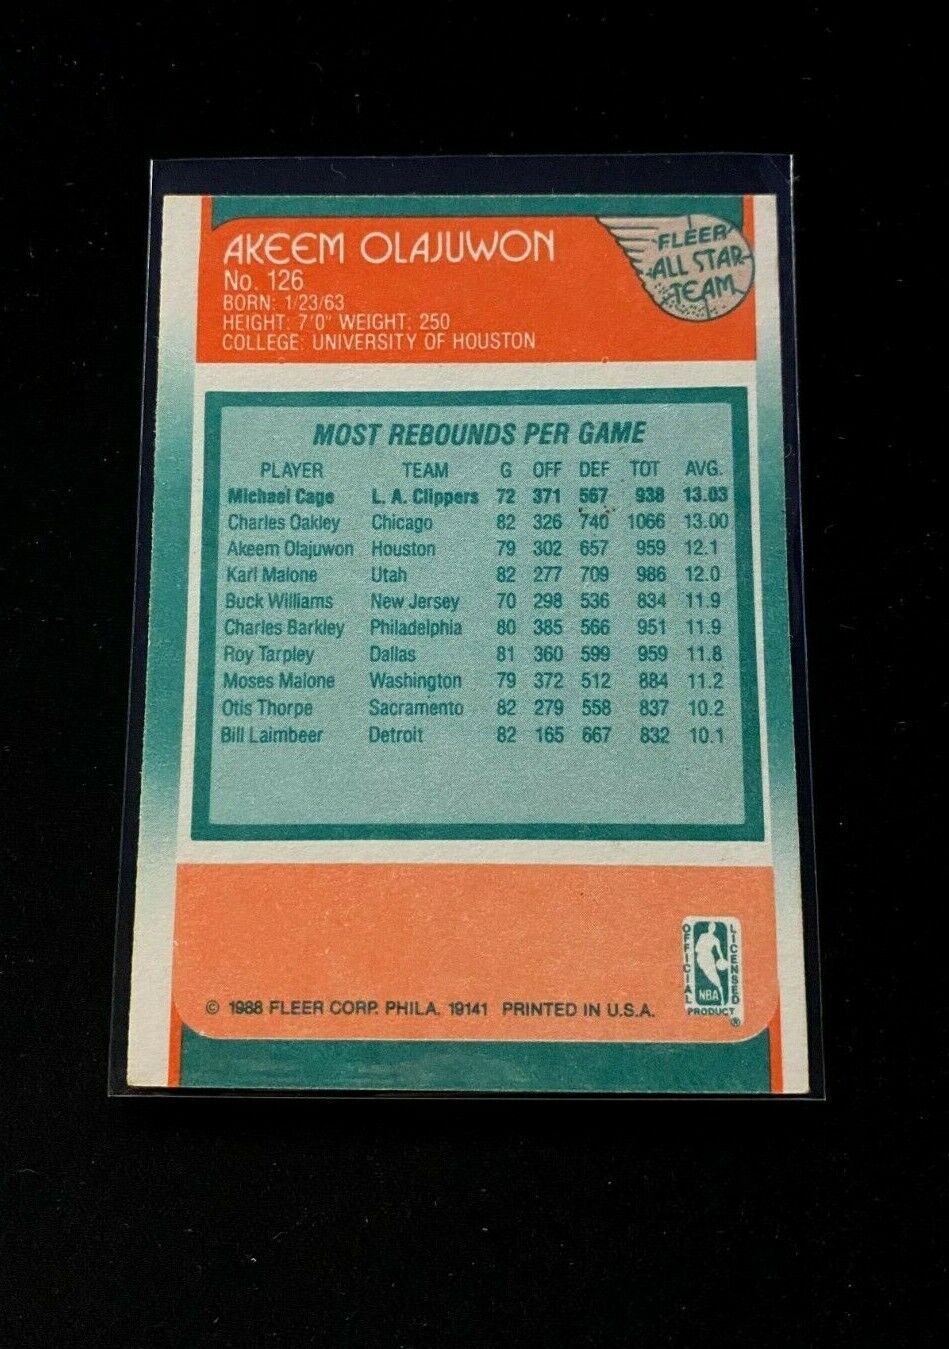 1988 Fleer Akeem Olajuwon All star Card (GREAT CONDITION!)